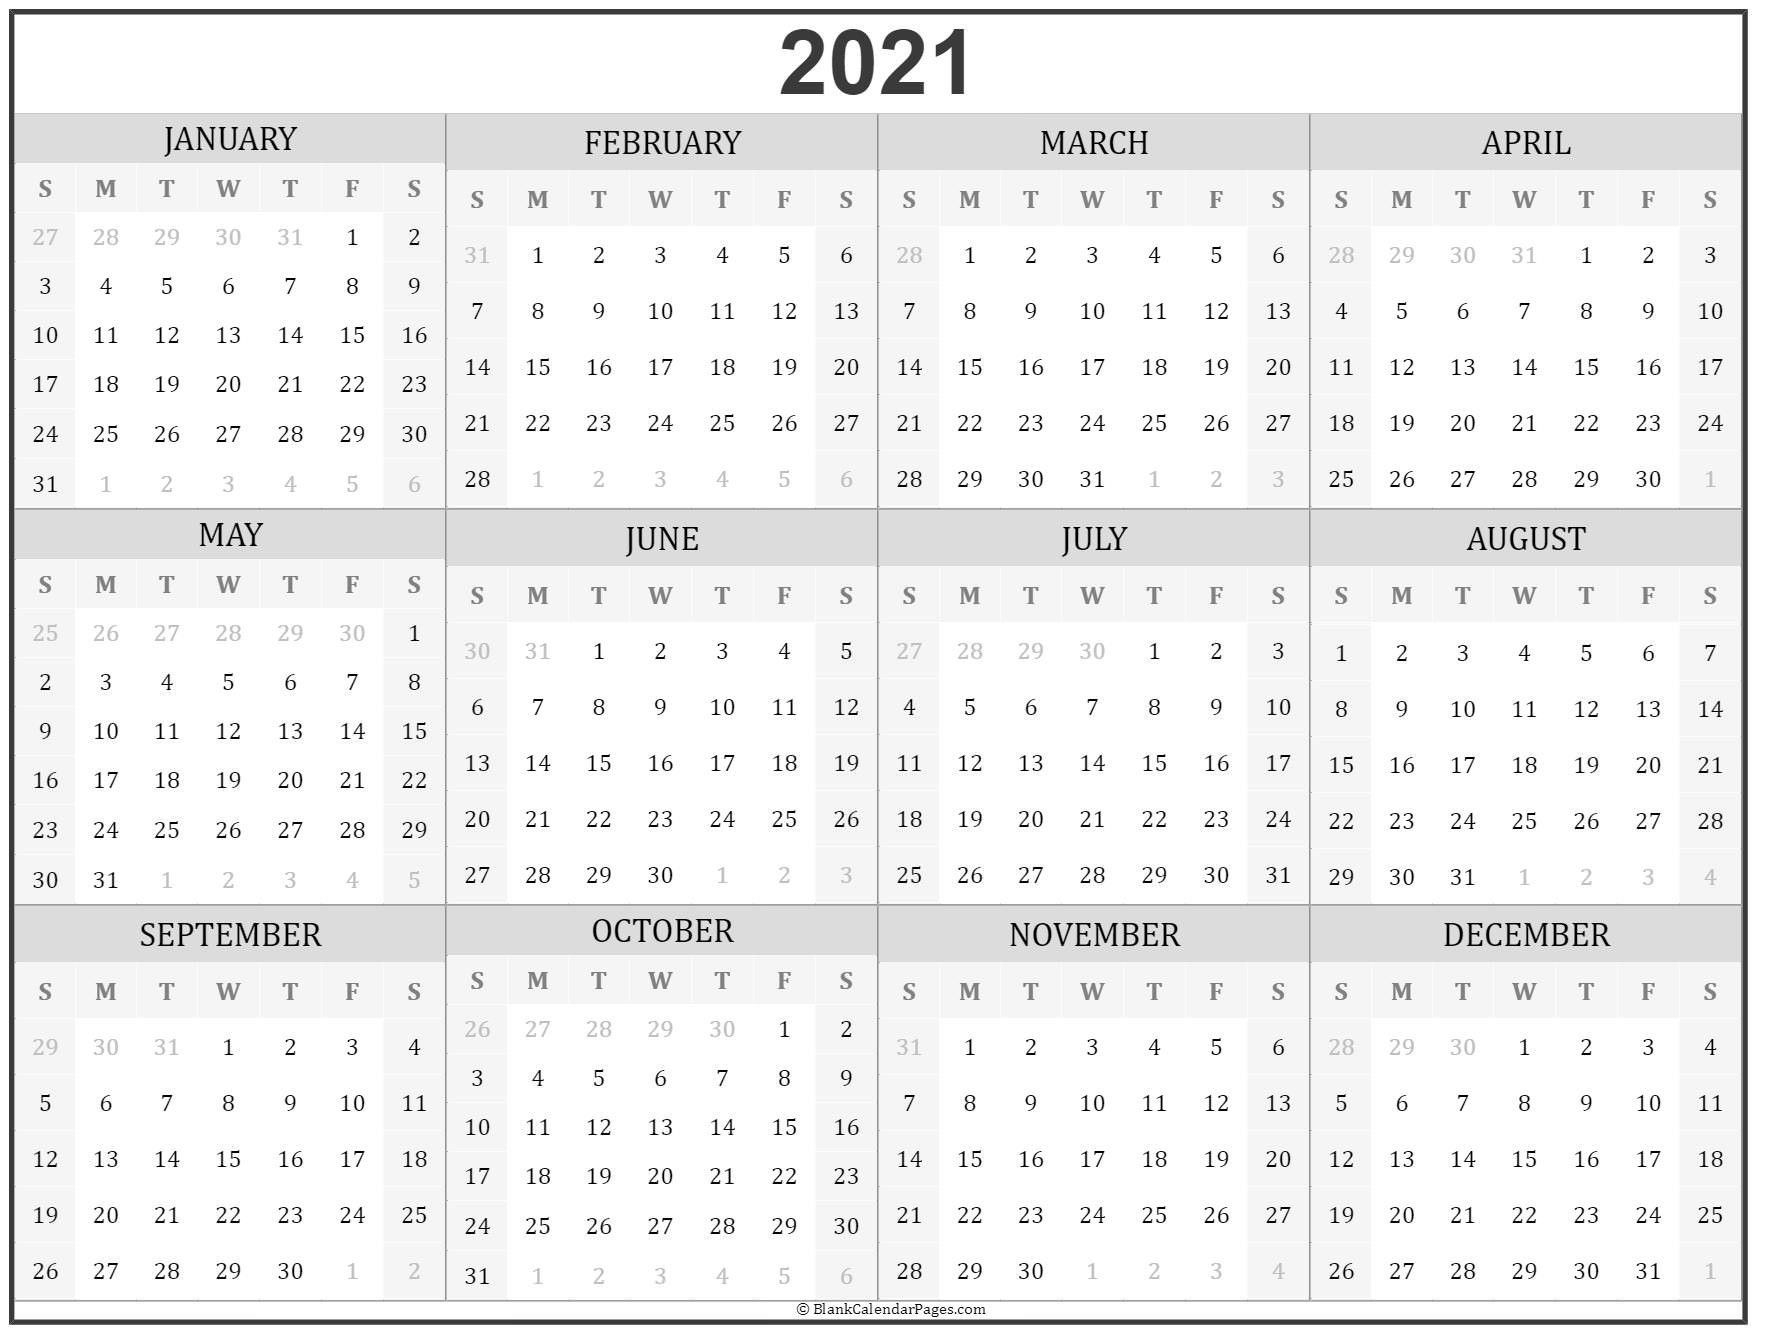 2021 Year Calendar 2021 Year Calendar 2021 Year Calendar-2021 Annual Calendar Printable Free